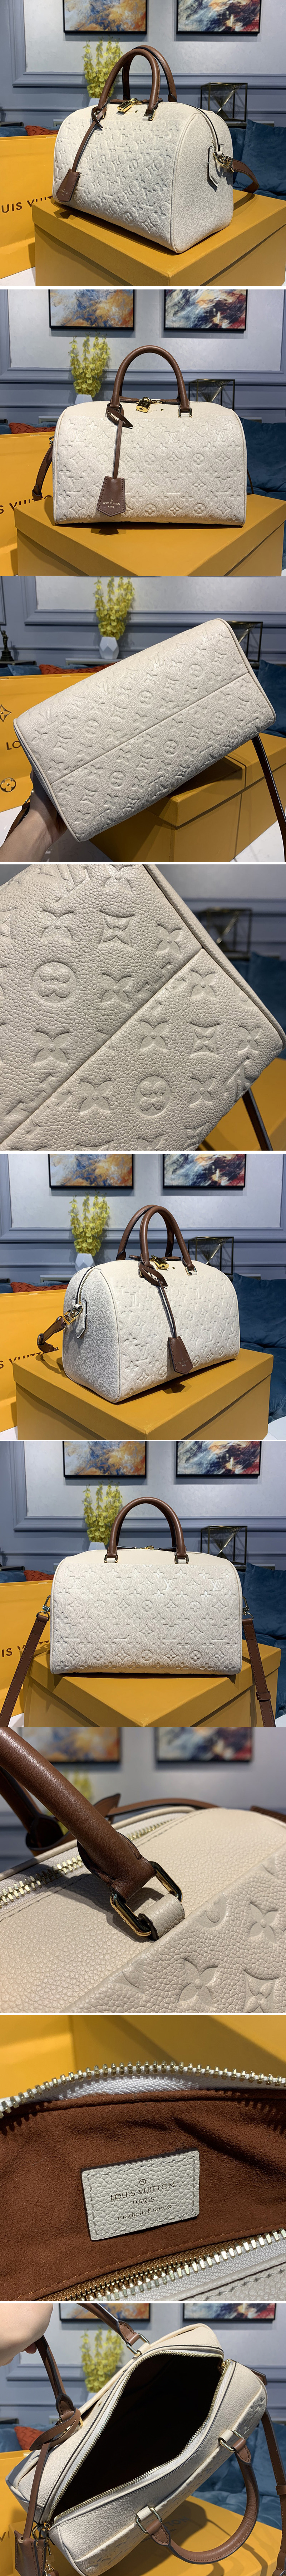 Replica Louis Vuitton M42406 Speedy Bandouliere 30 handbag in White Monogram Empreinte leather